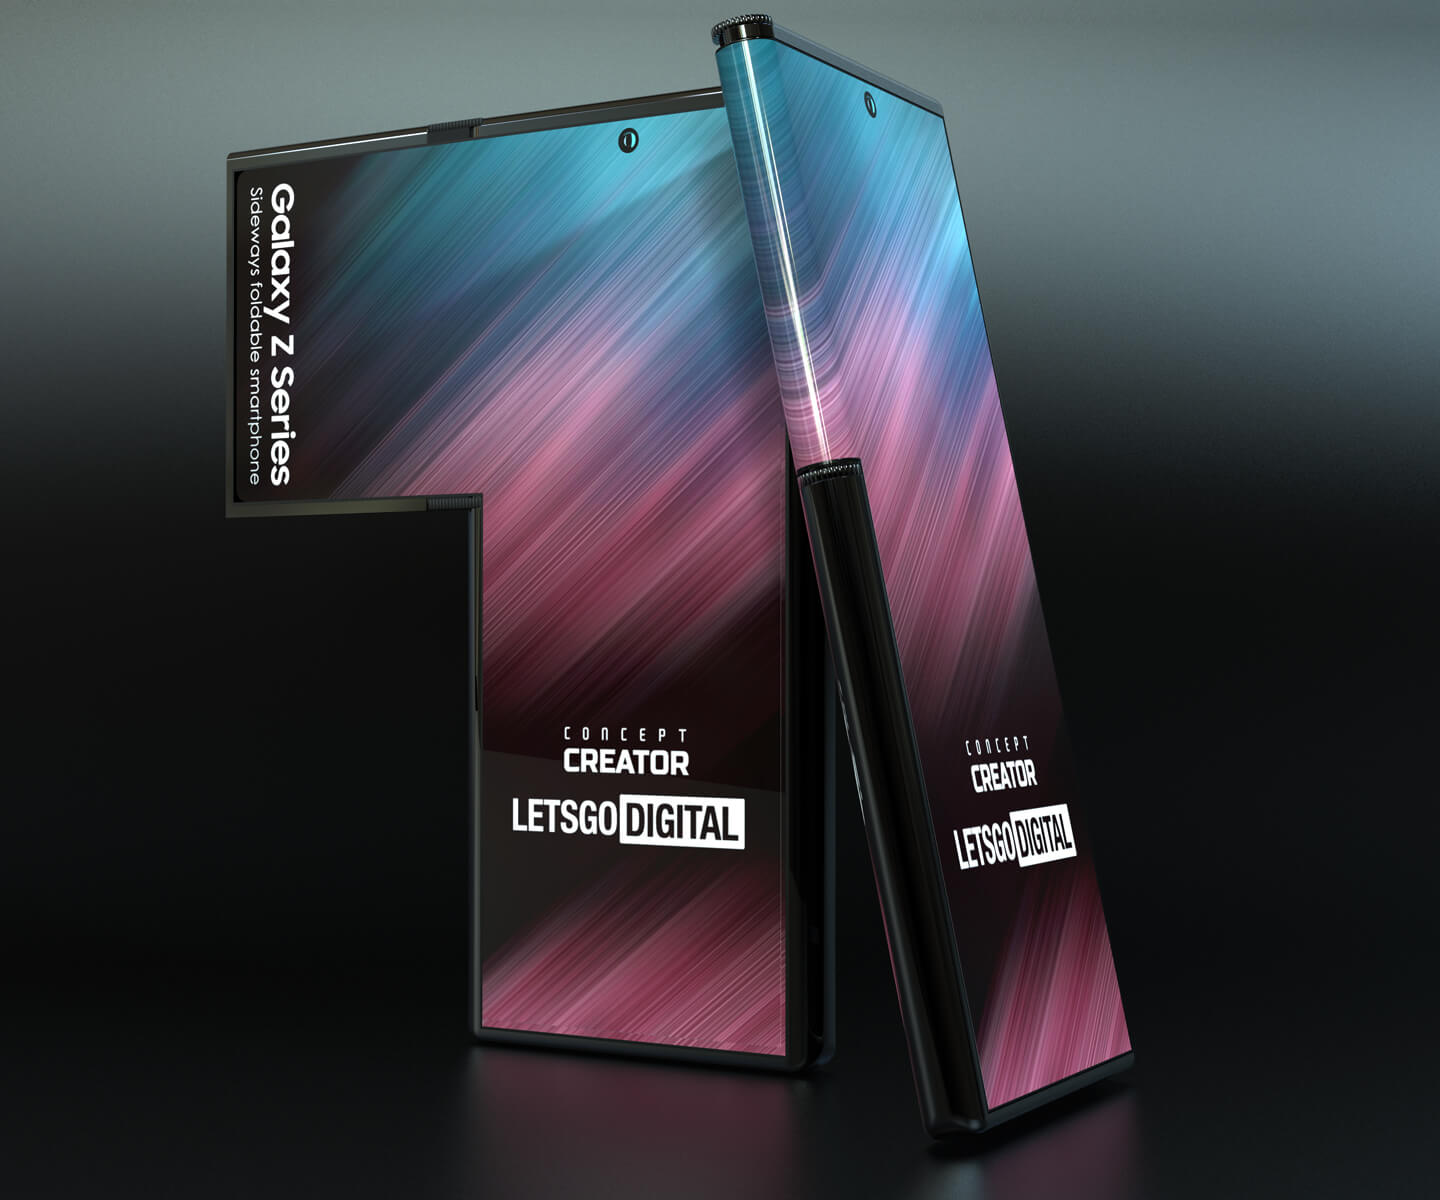 Samsung Galaxy Z series -Future of Flip smartphones
Galaxy Z series